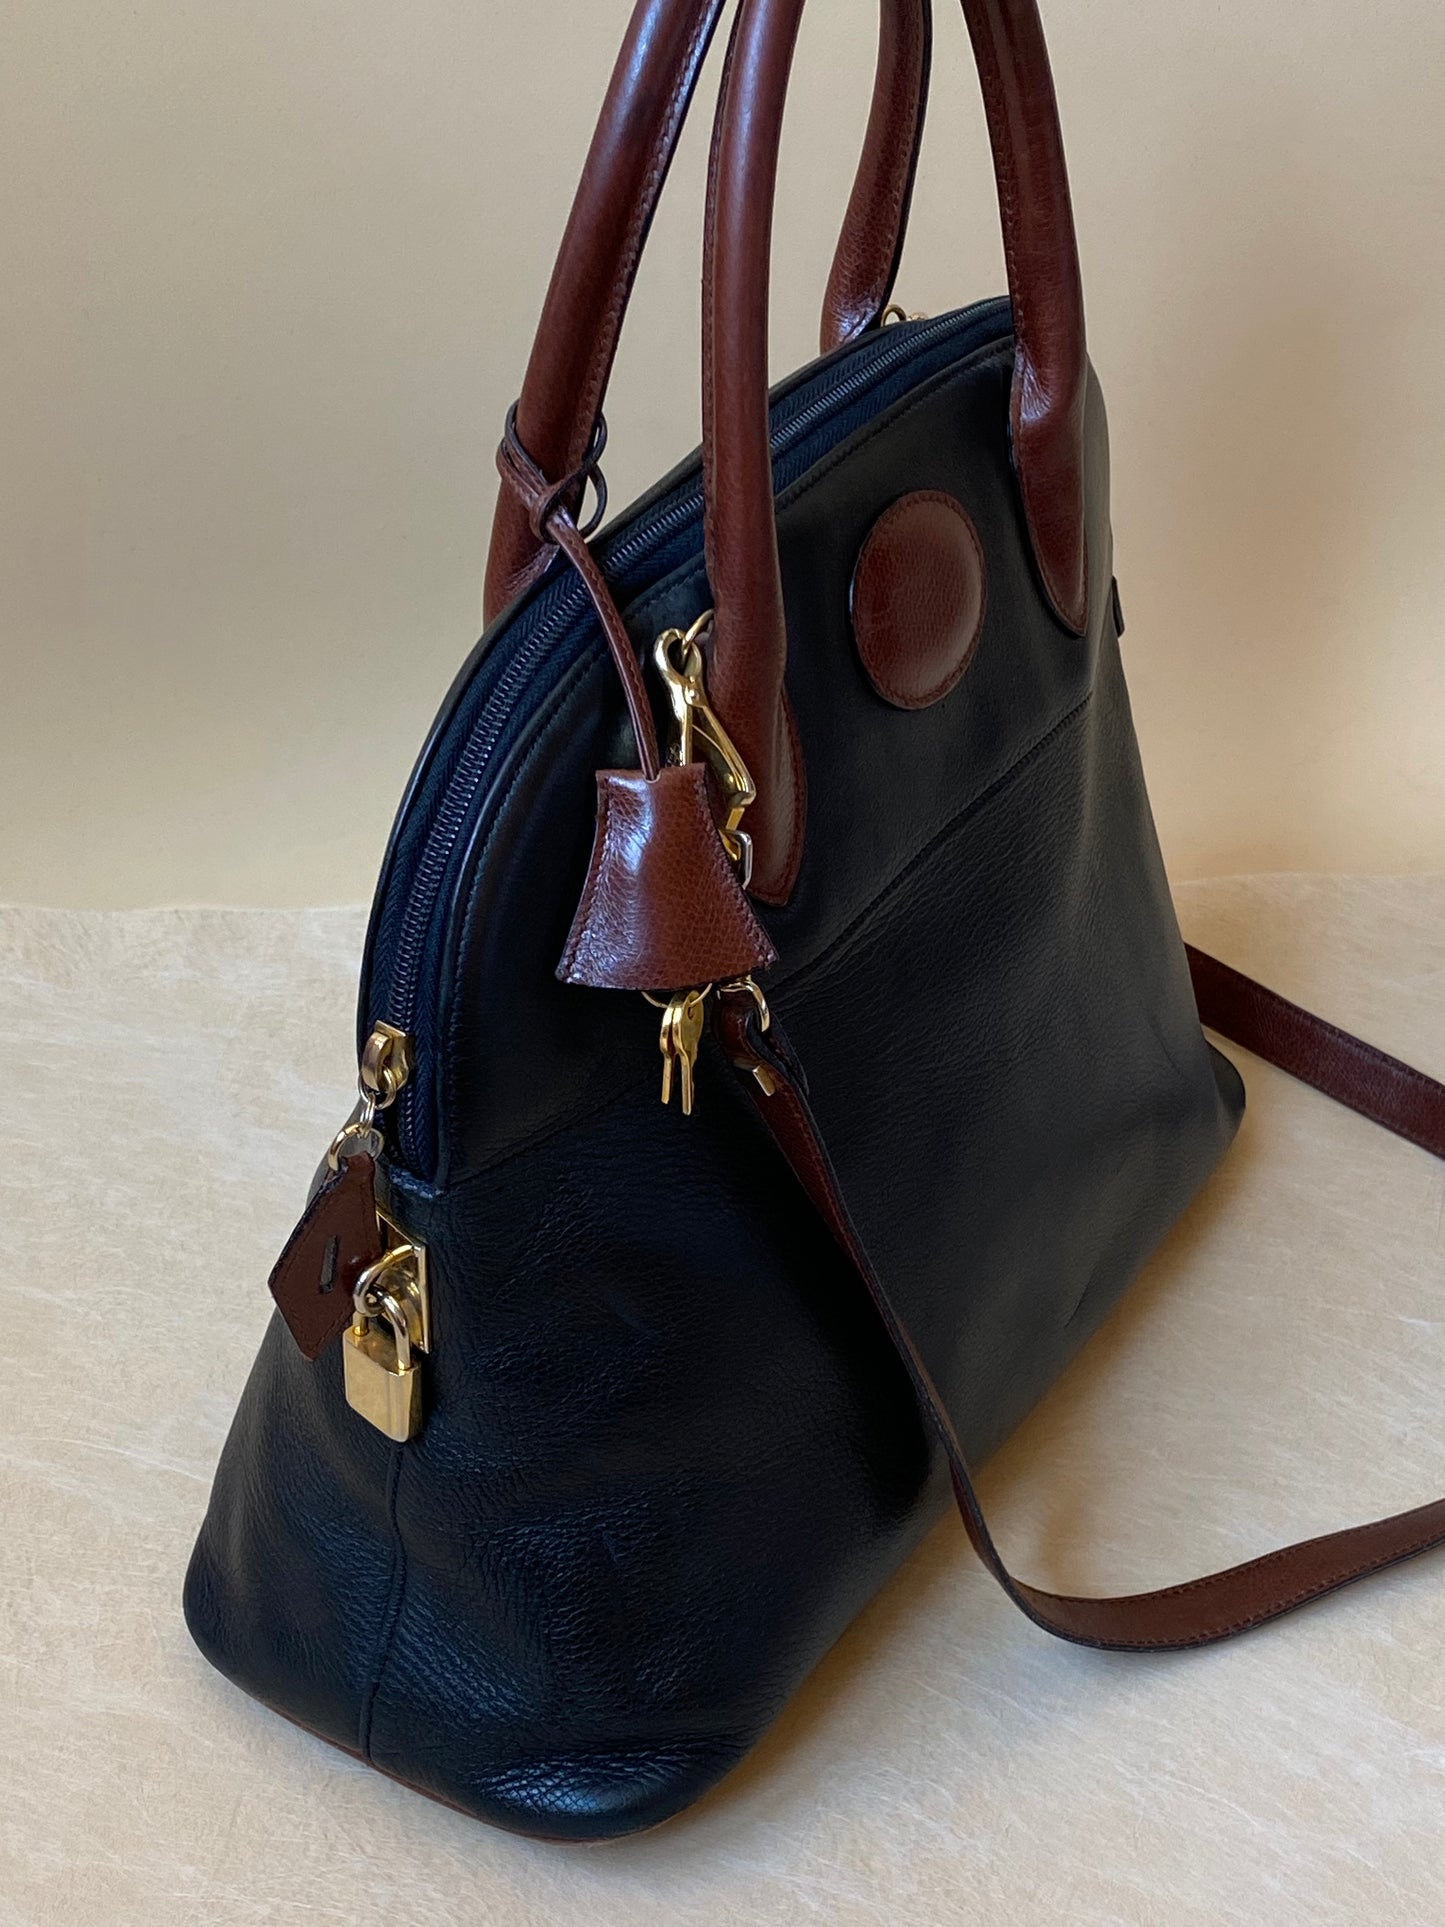 Vintage Black & Brown Leather Handbag by Serapian